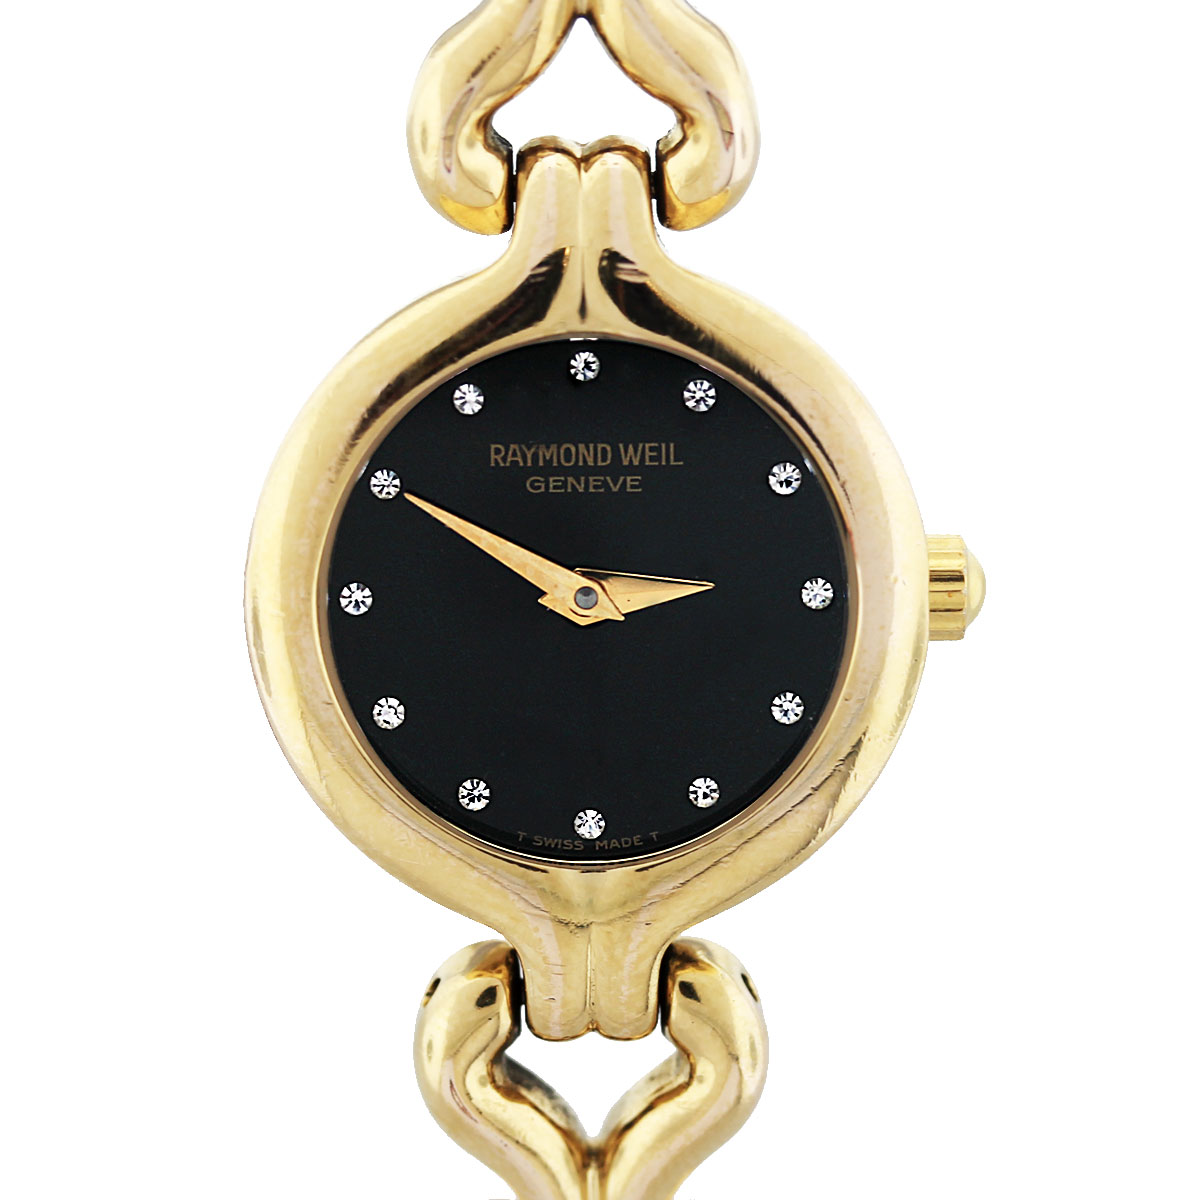 Raymond Weil 5878 Ladies Gold Plated Watch